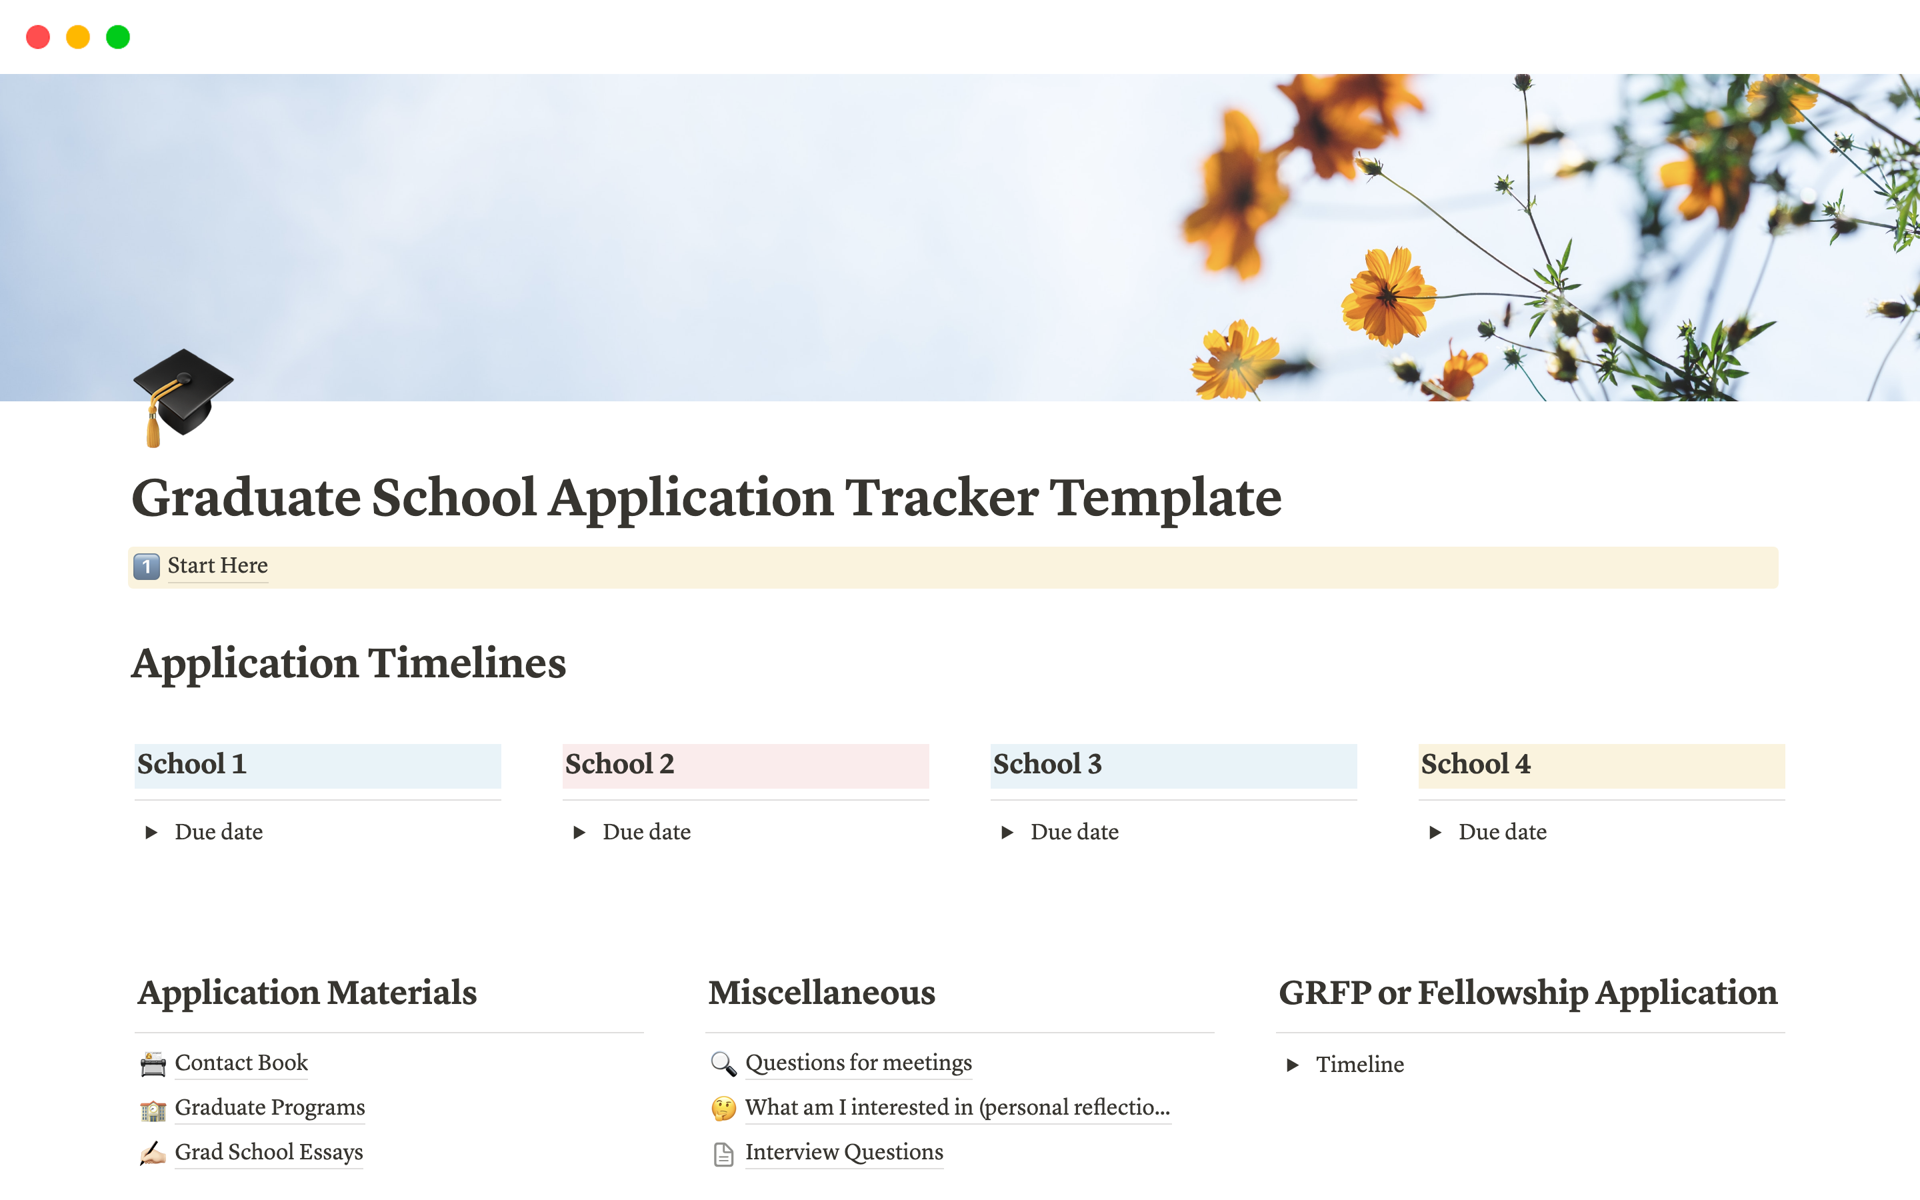 Mallin esikatselu nimelle Graduate School Application Tracker